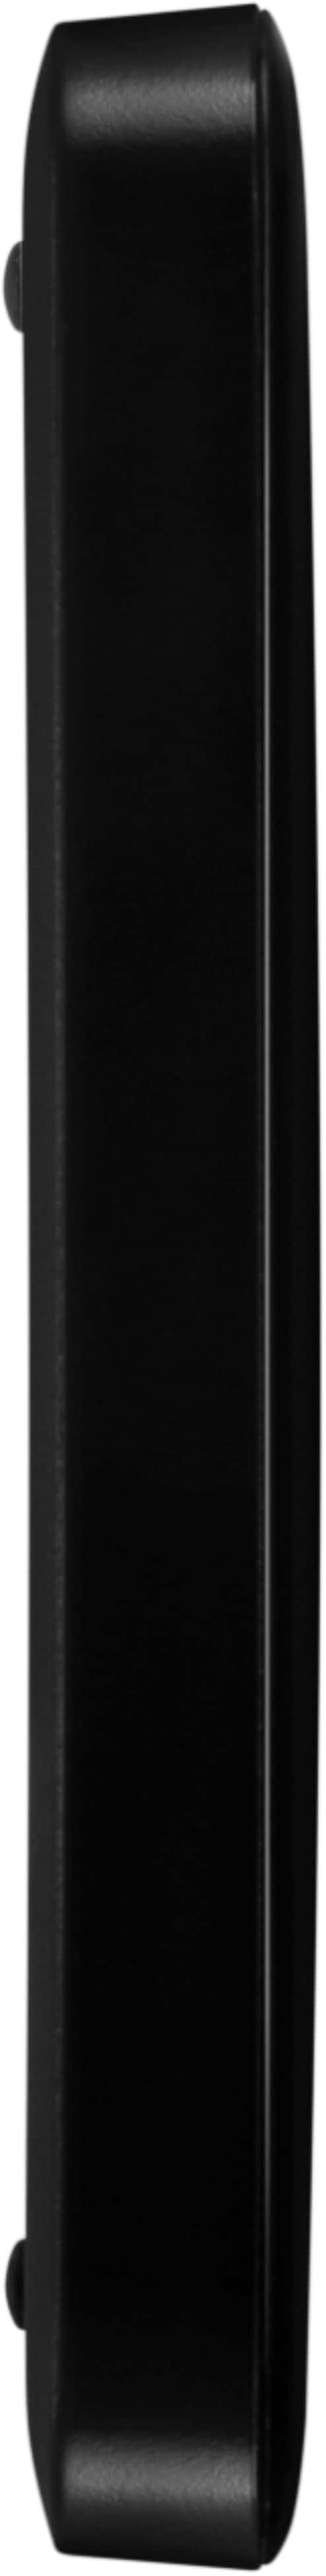 WD - Easystore 1TB External USB 3.0 Portable Hard Drive - Black_5